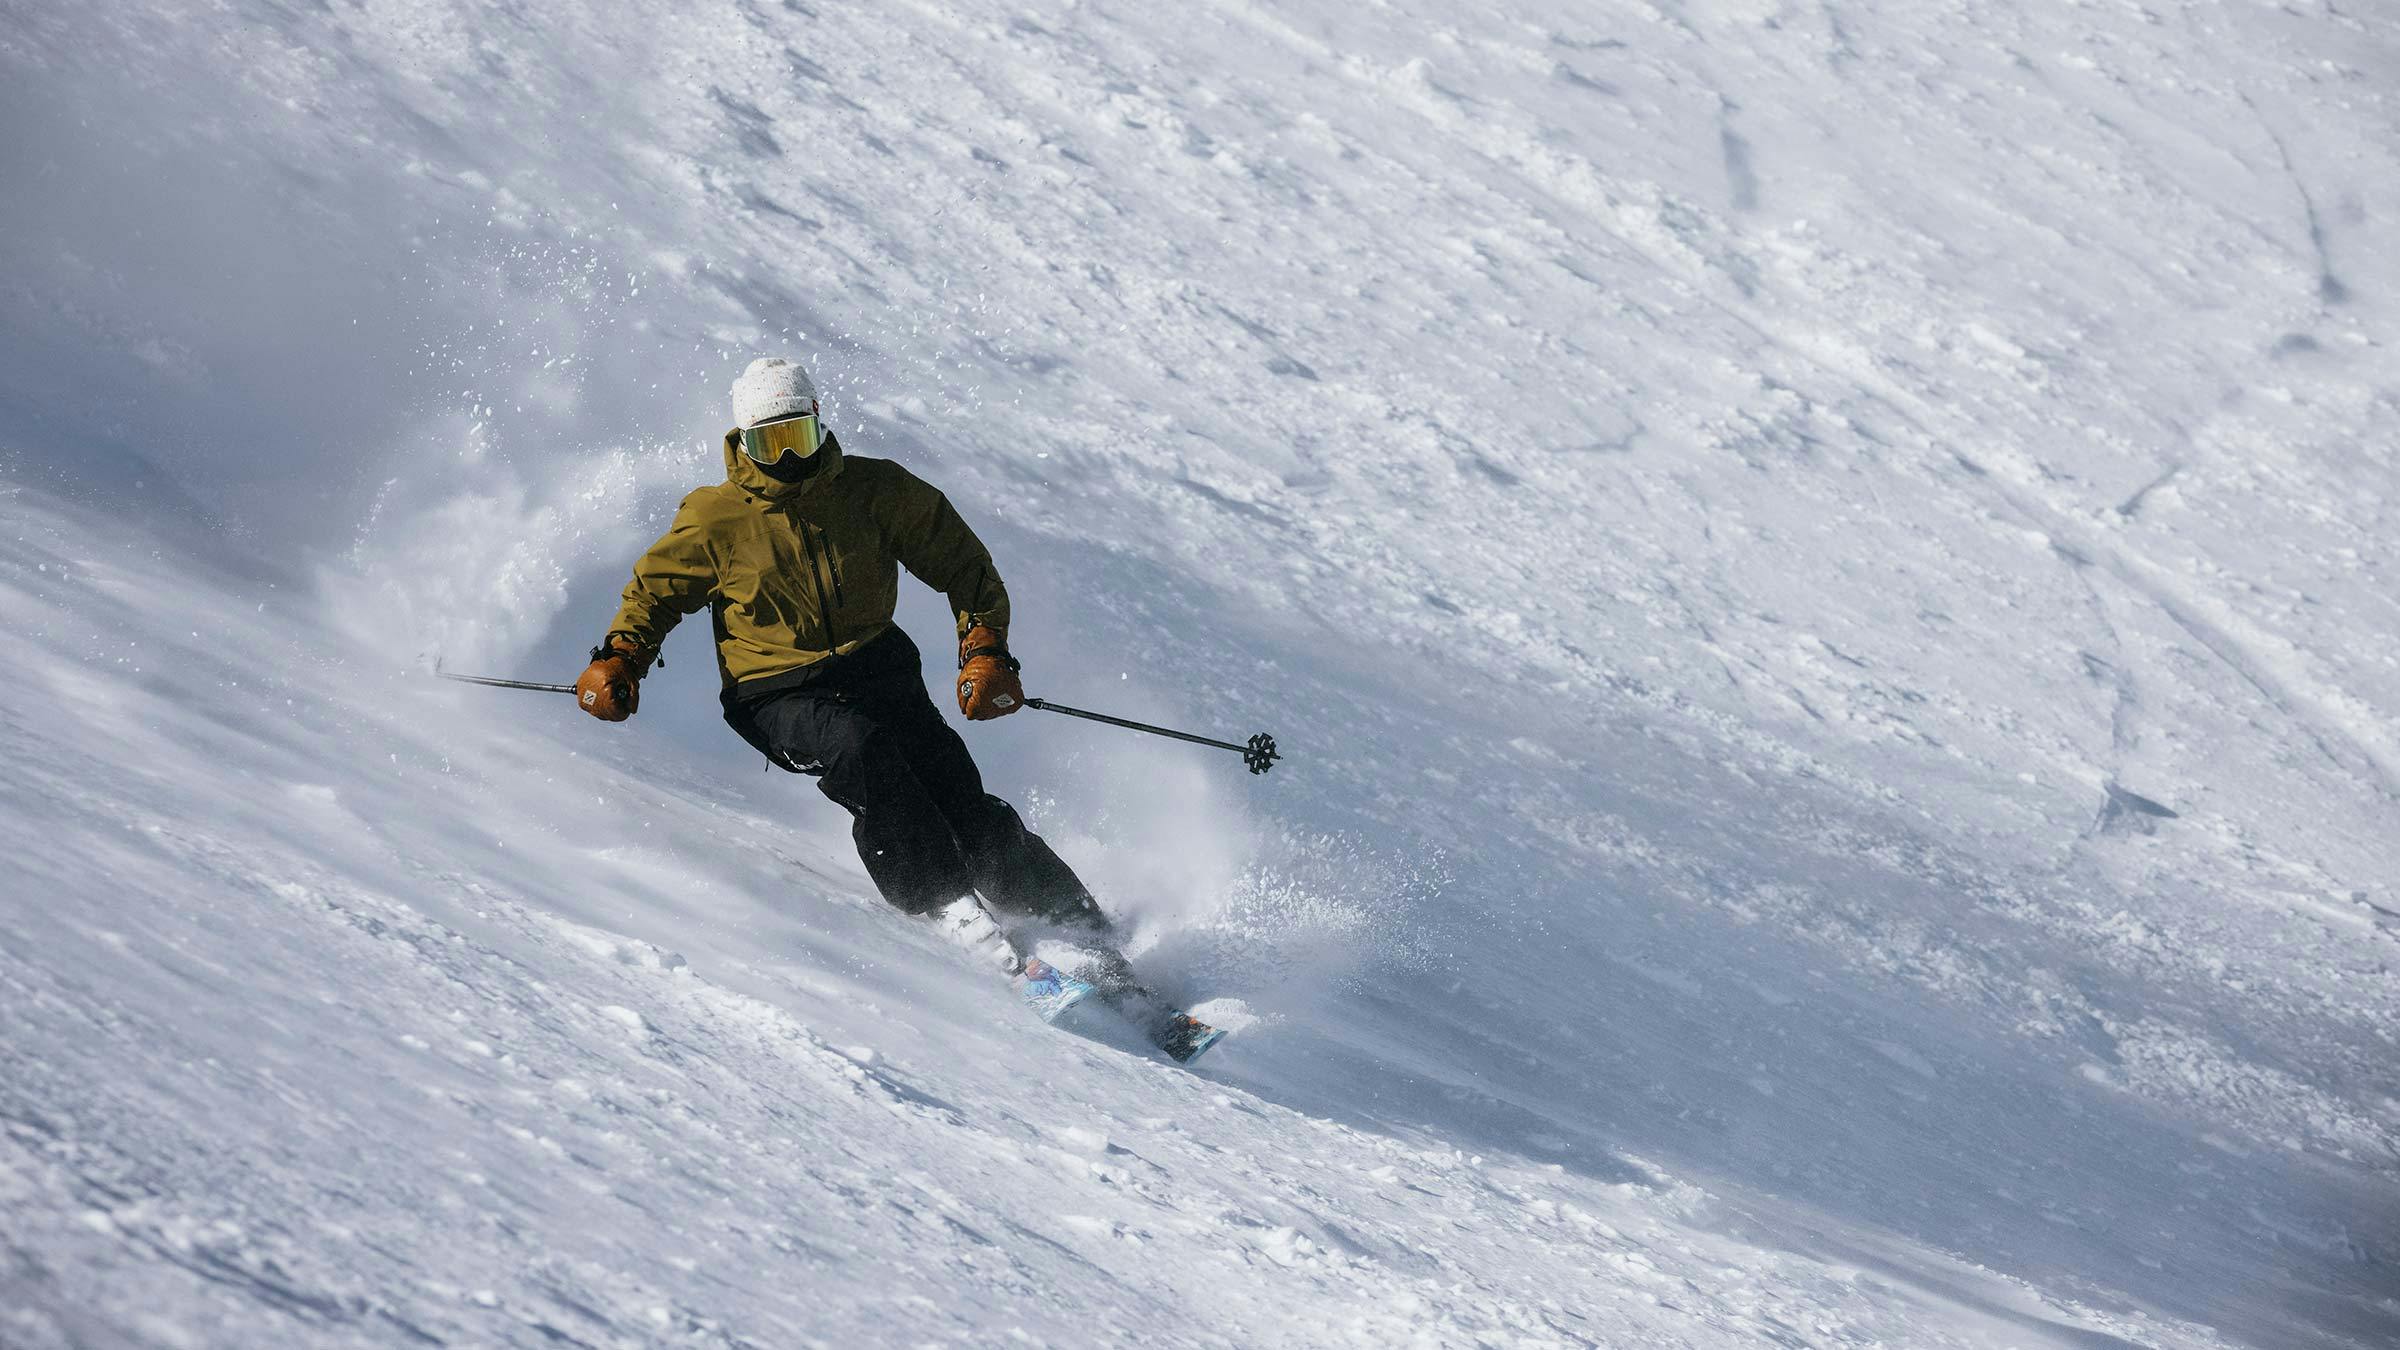 Skier on steep slope